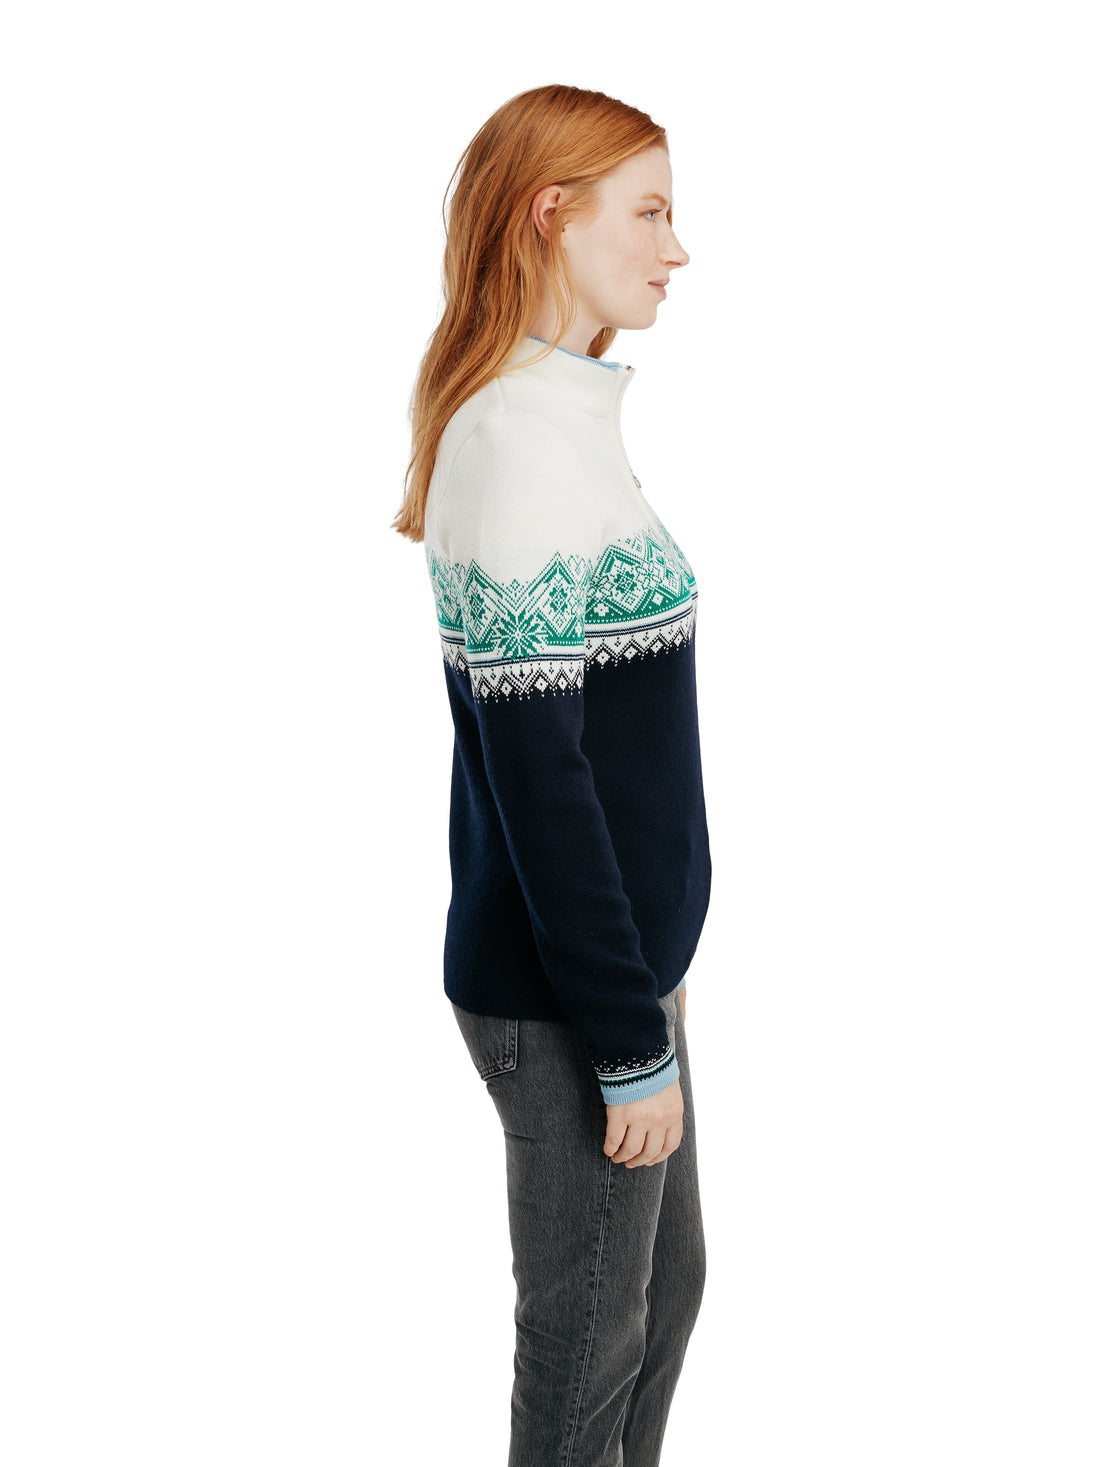 Dale of Norway - Moritz Women's Sweater 